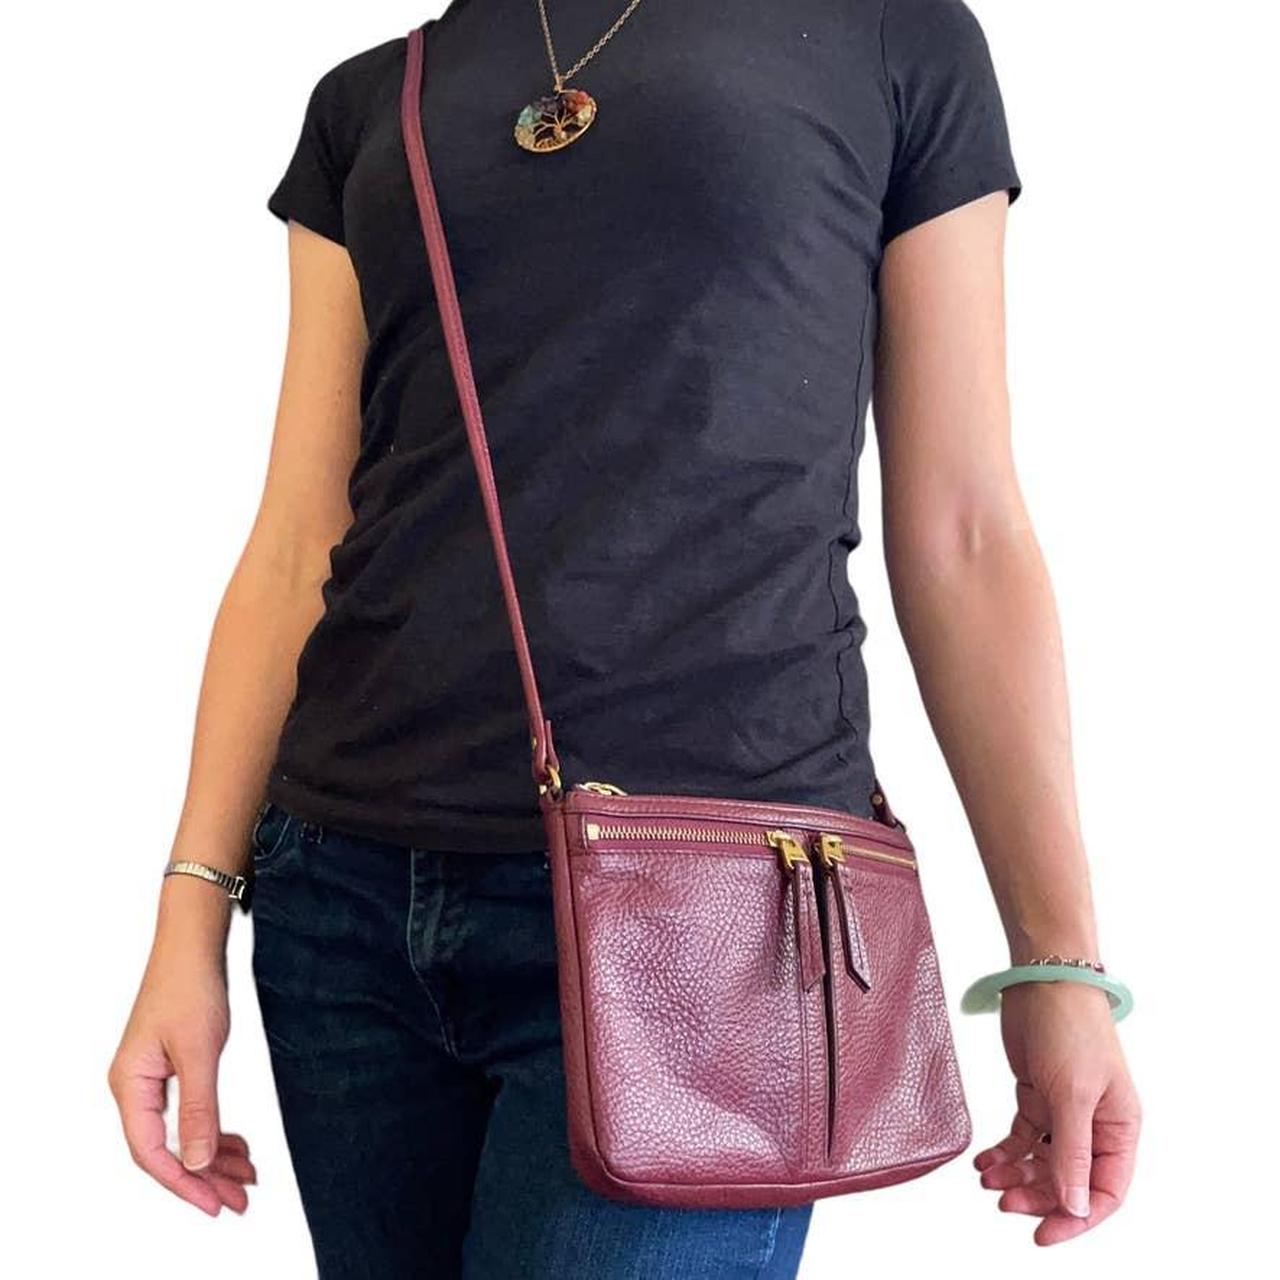 Buy Roma Leathers Genuine Leather Multi-Pocket Crossbody Purse Bag Burgundy  at Amazon.in